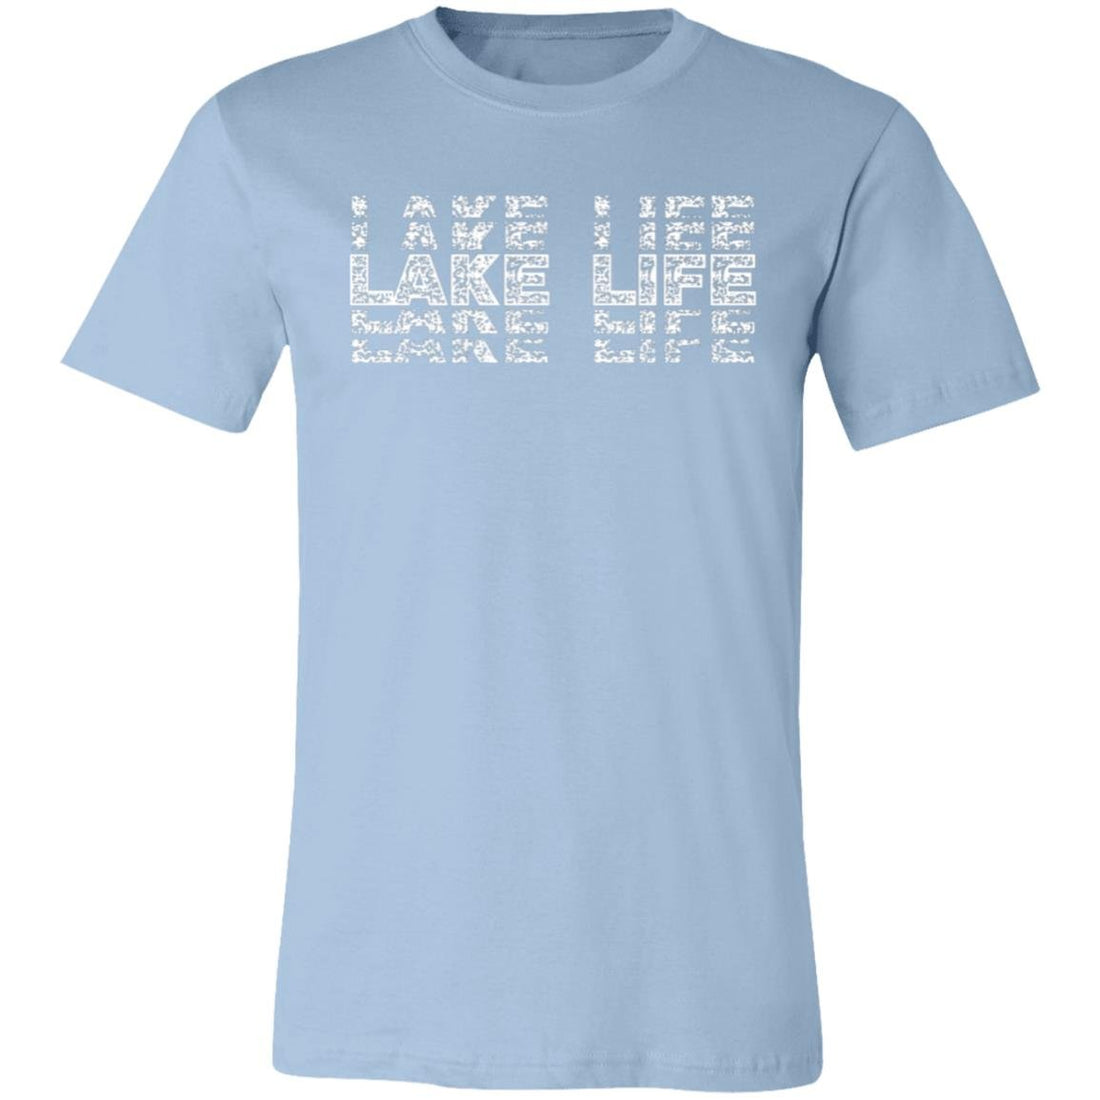 Lake Life T-Shirt - T-Shirts - Positively Sassy - Lake Life T-Shirt